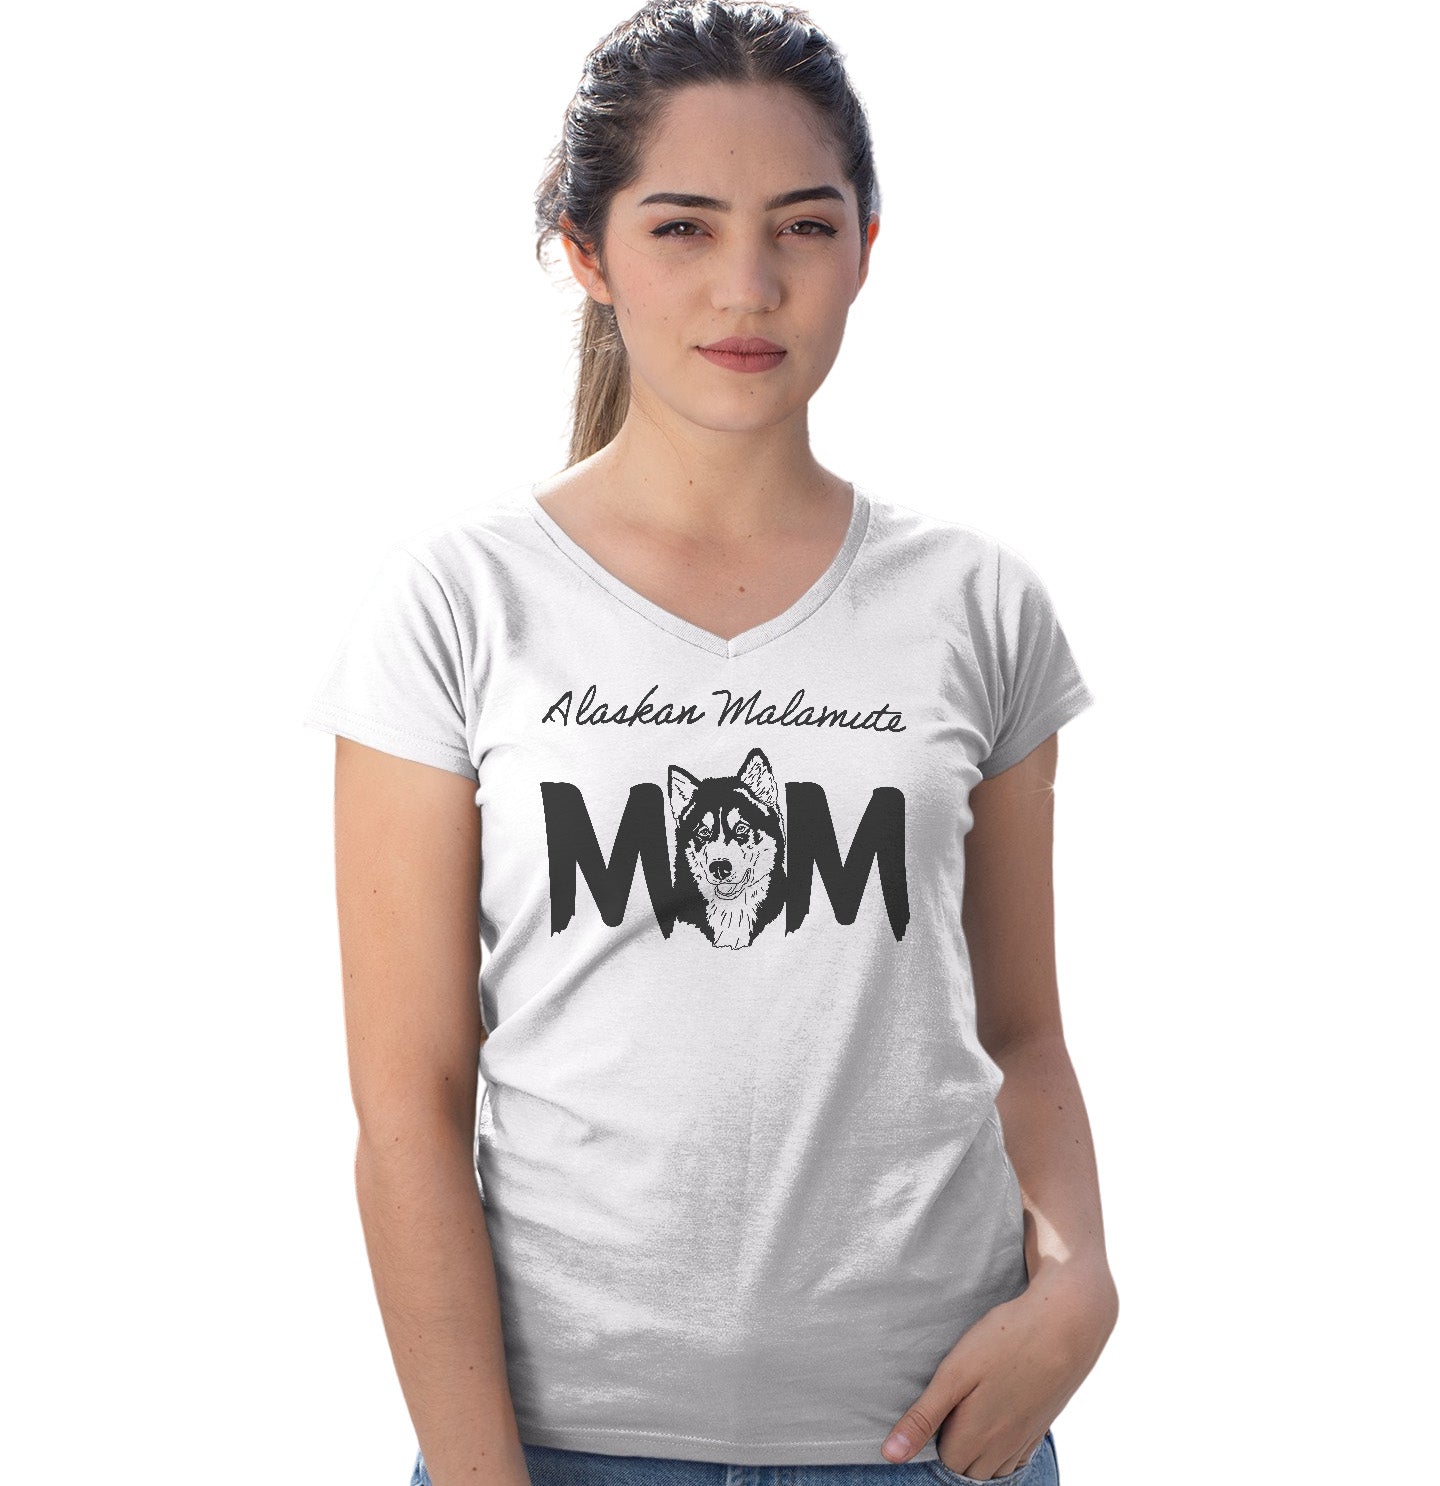 Alaskan Malamute Breed Mom - Women's V-Neck T-Shirt